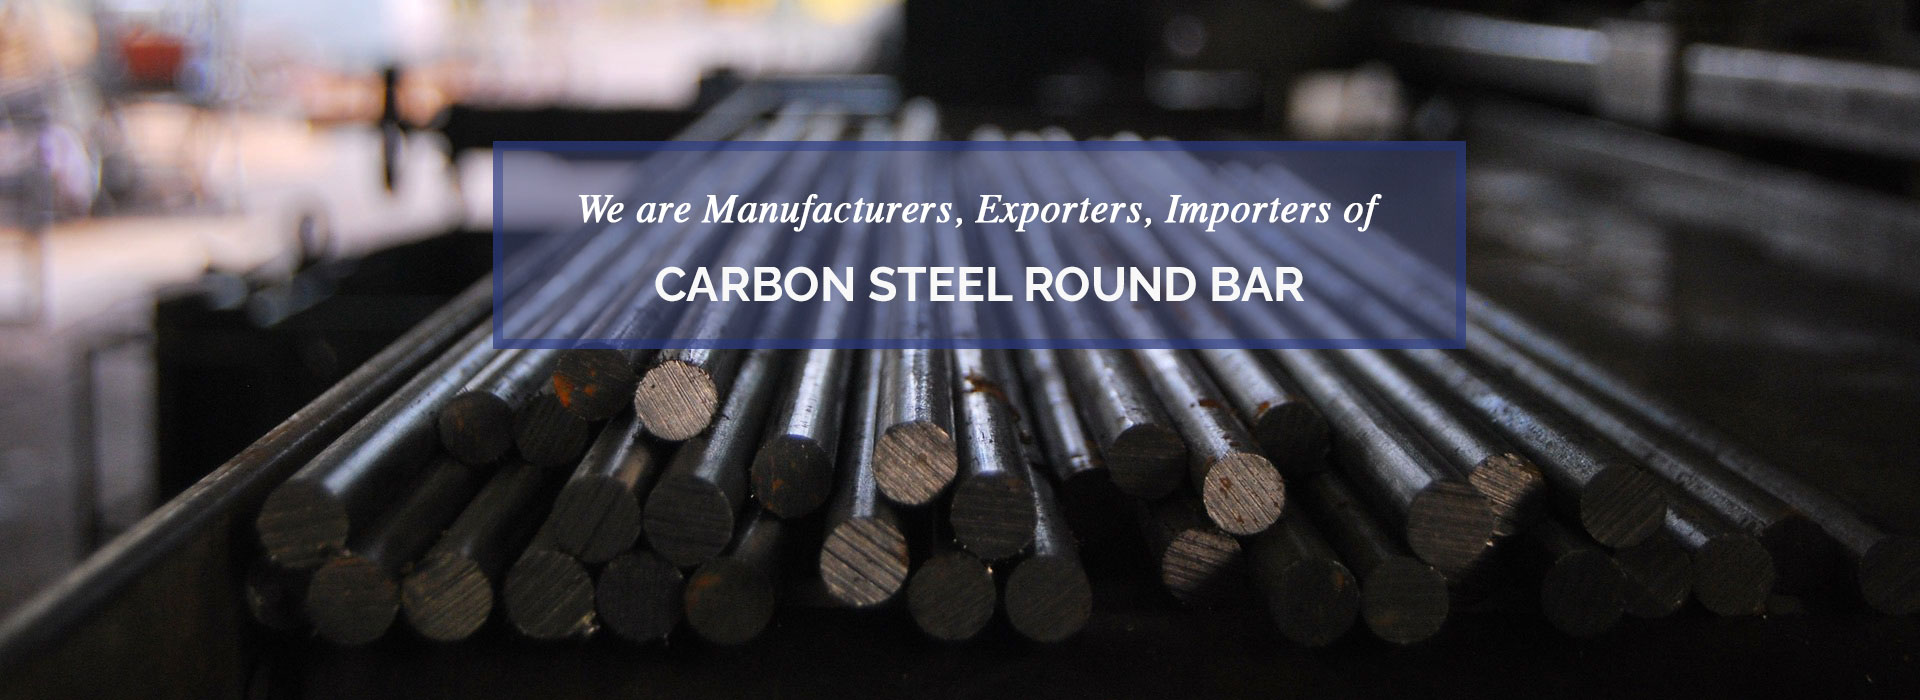 Carbon Steel Round Bar Manufacturers in Mumbai